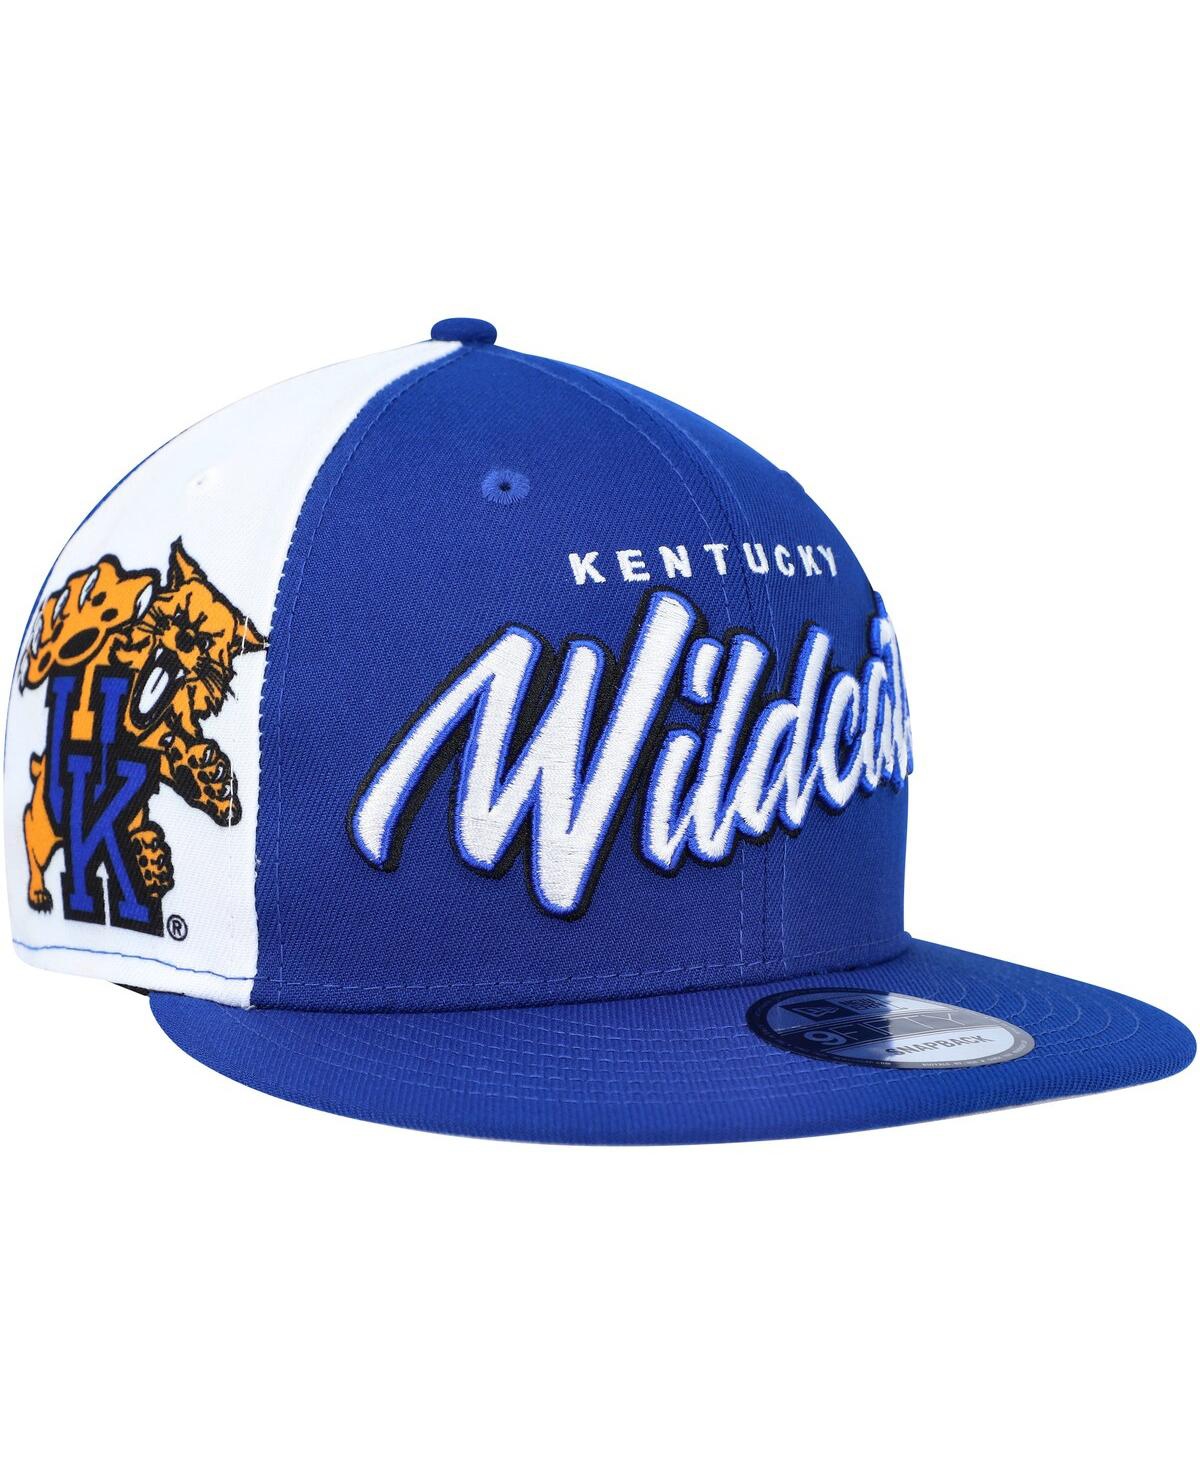 Shop New Era Men's  Royal Kentucky Wildcats Outright 9fifty Snapback Hat